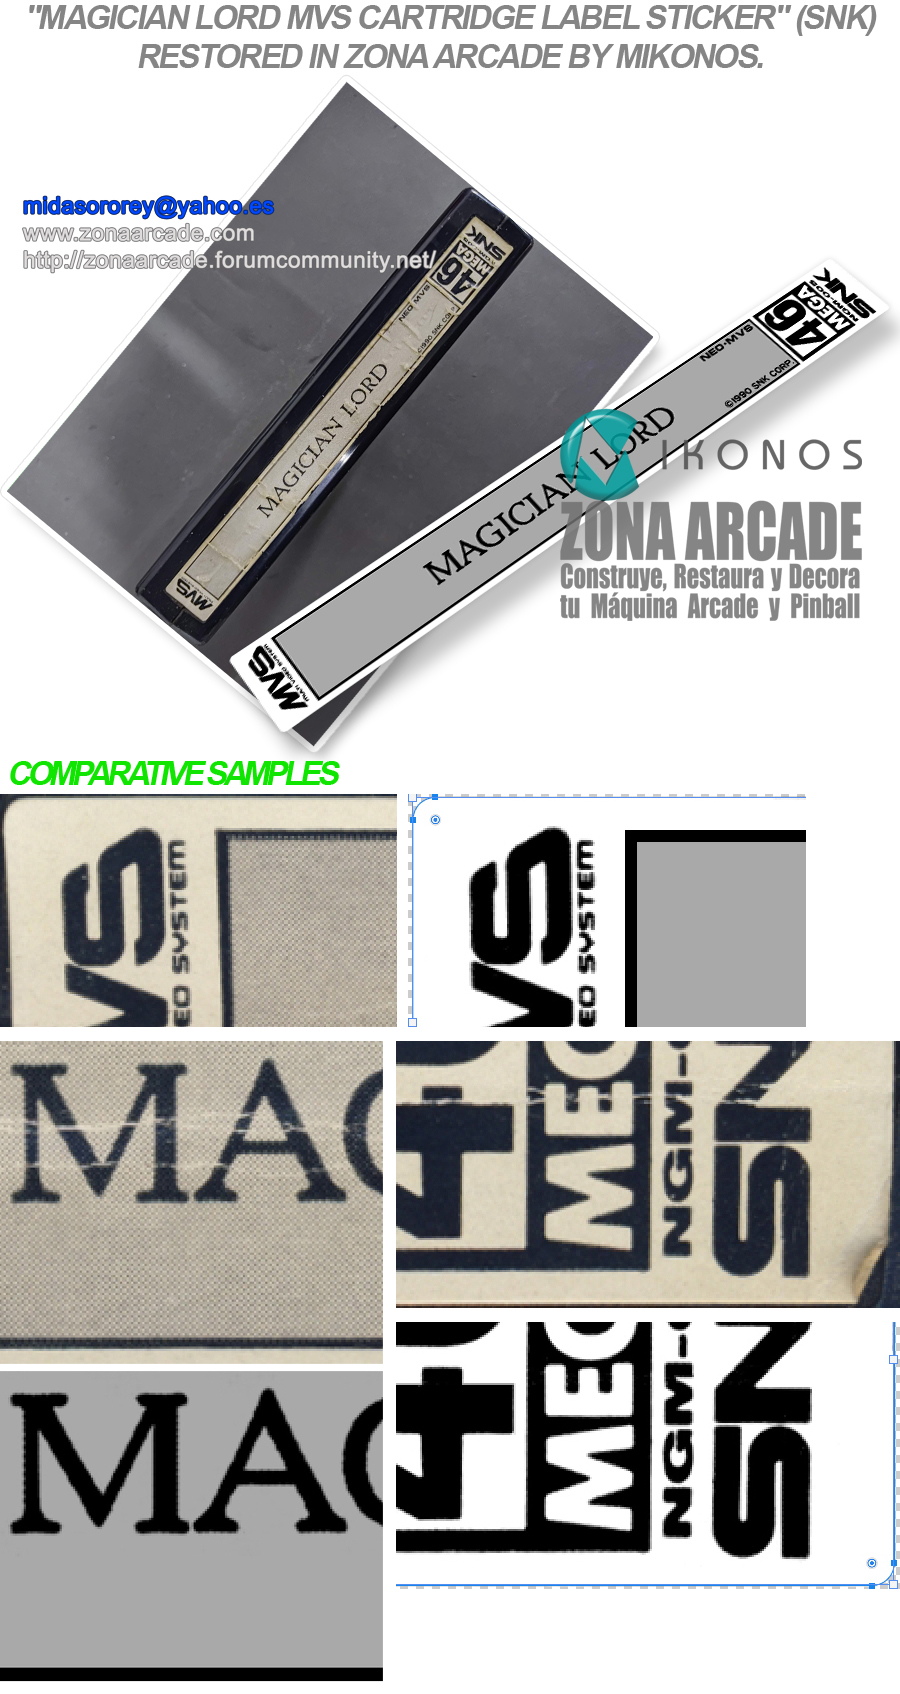 Magician-Lord-MVS-Cartridge-Label-Sticker-Restored-Mikonos1